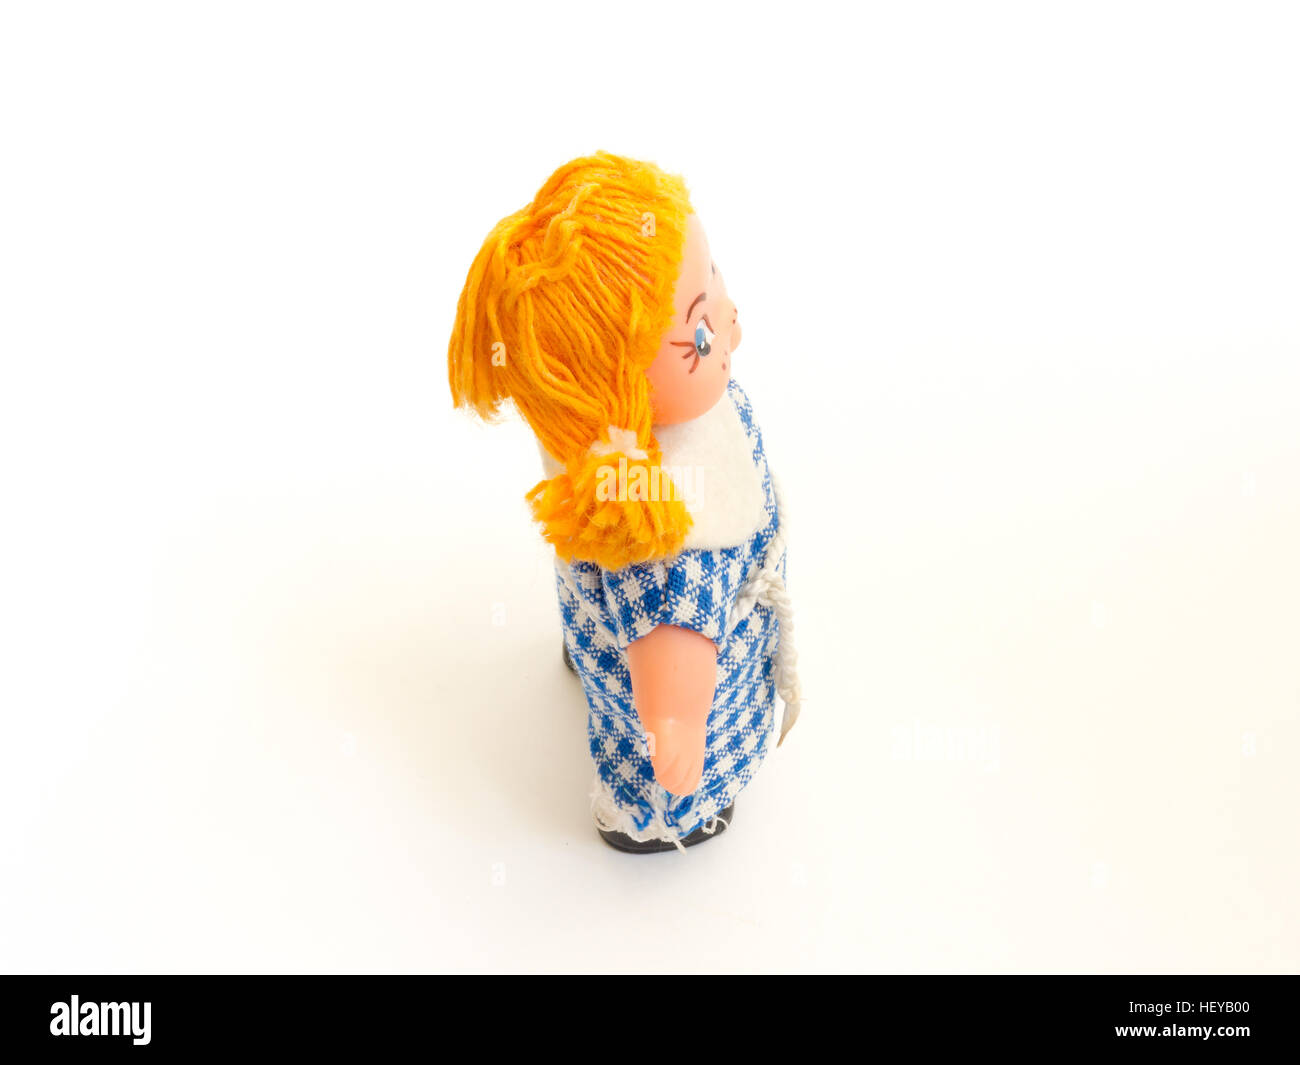 The Miniature toy girl. Stock Photo